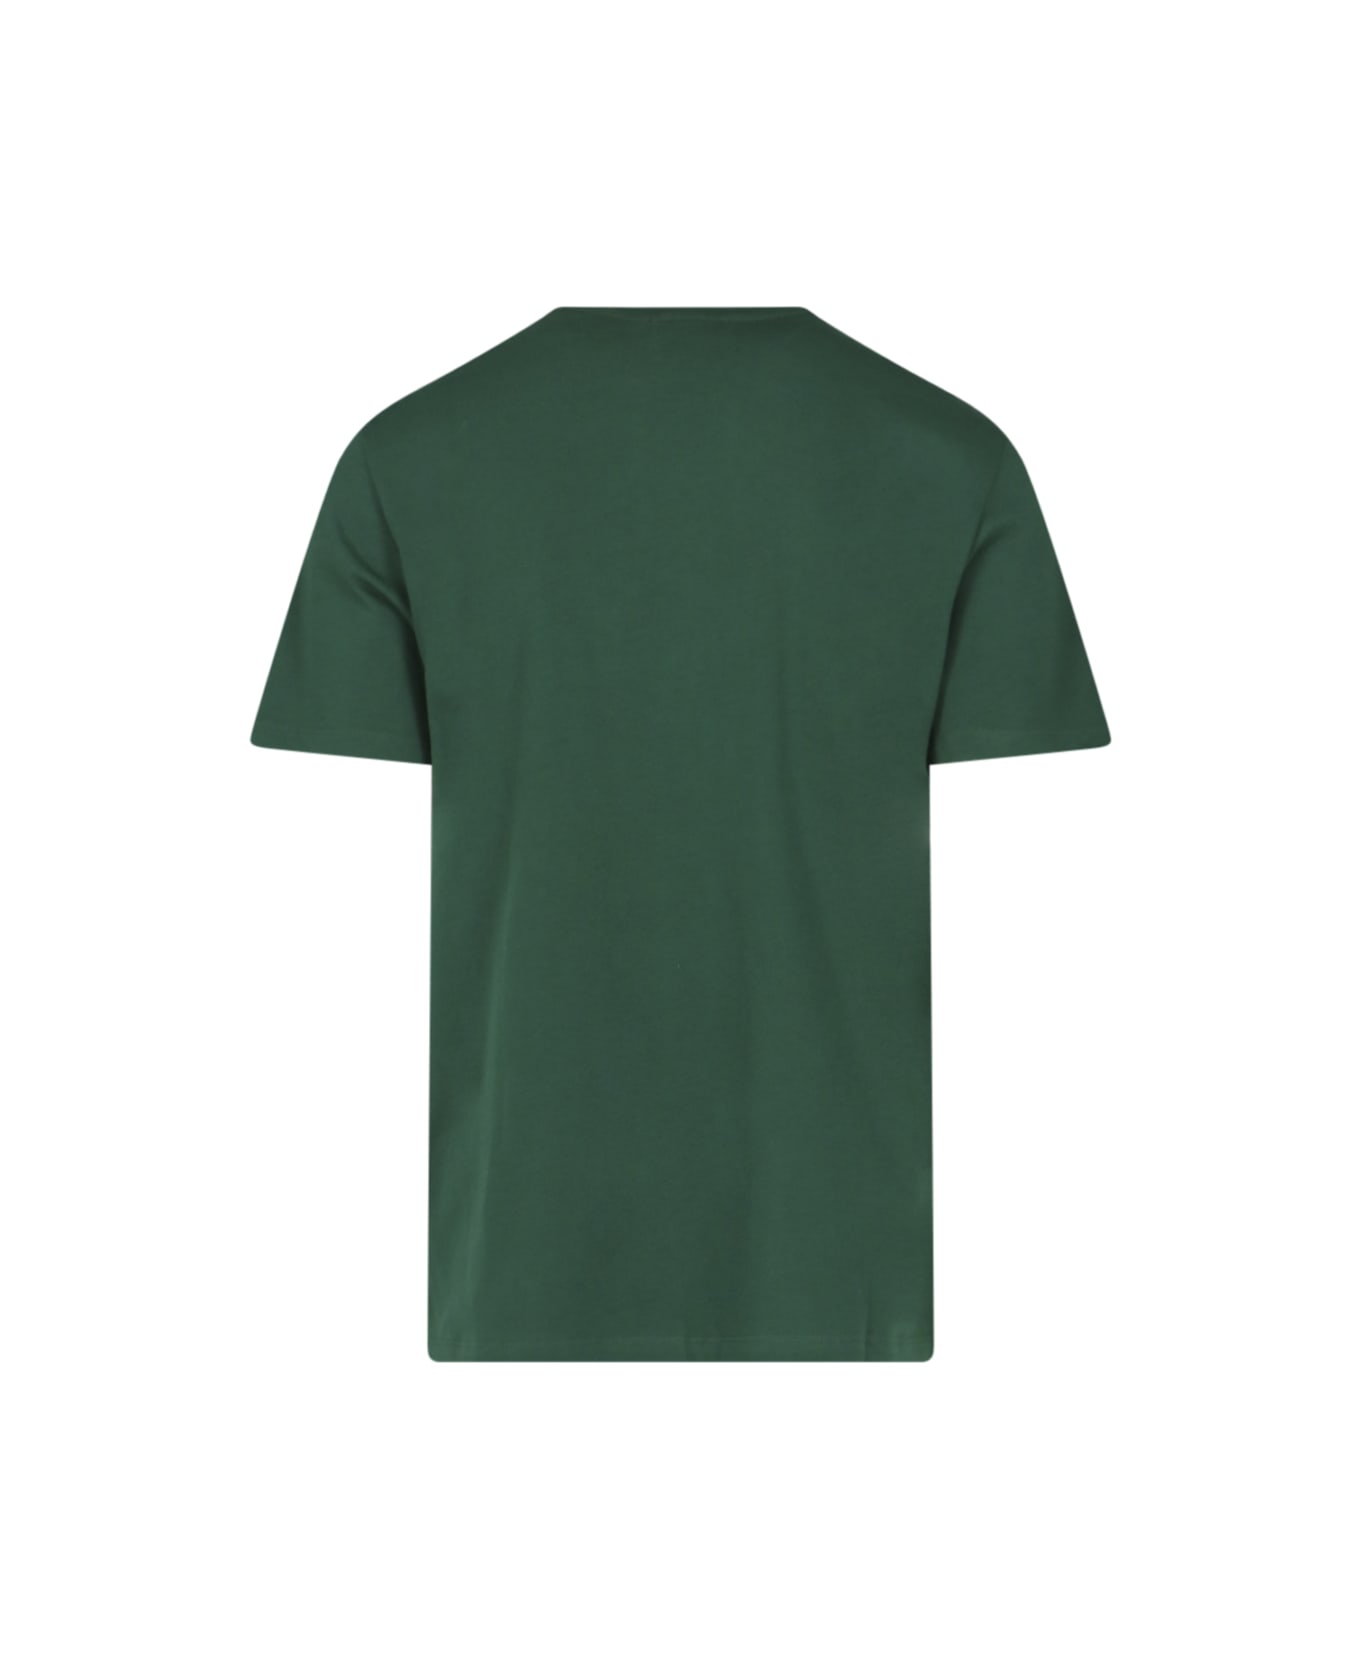 A.P.C. Madame Cotton Crew-neck T-shirt - green シャツ